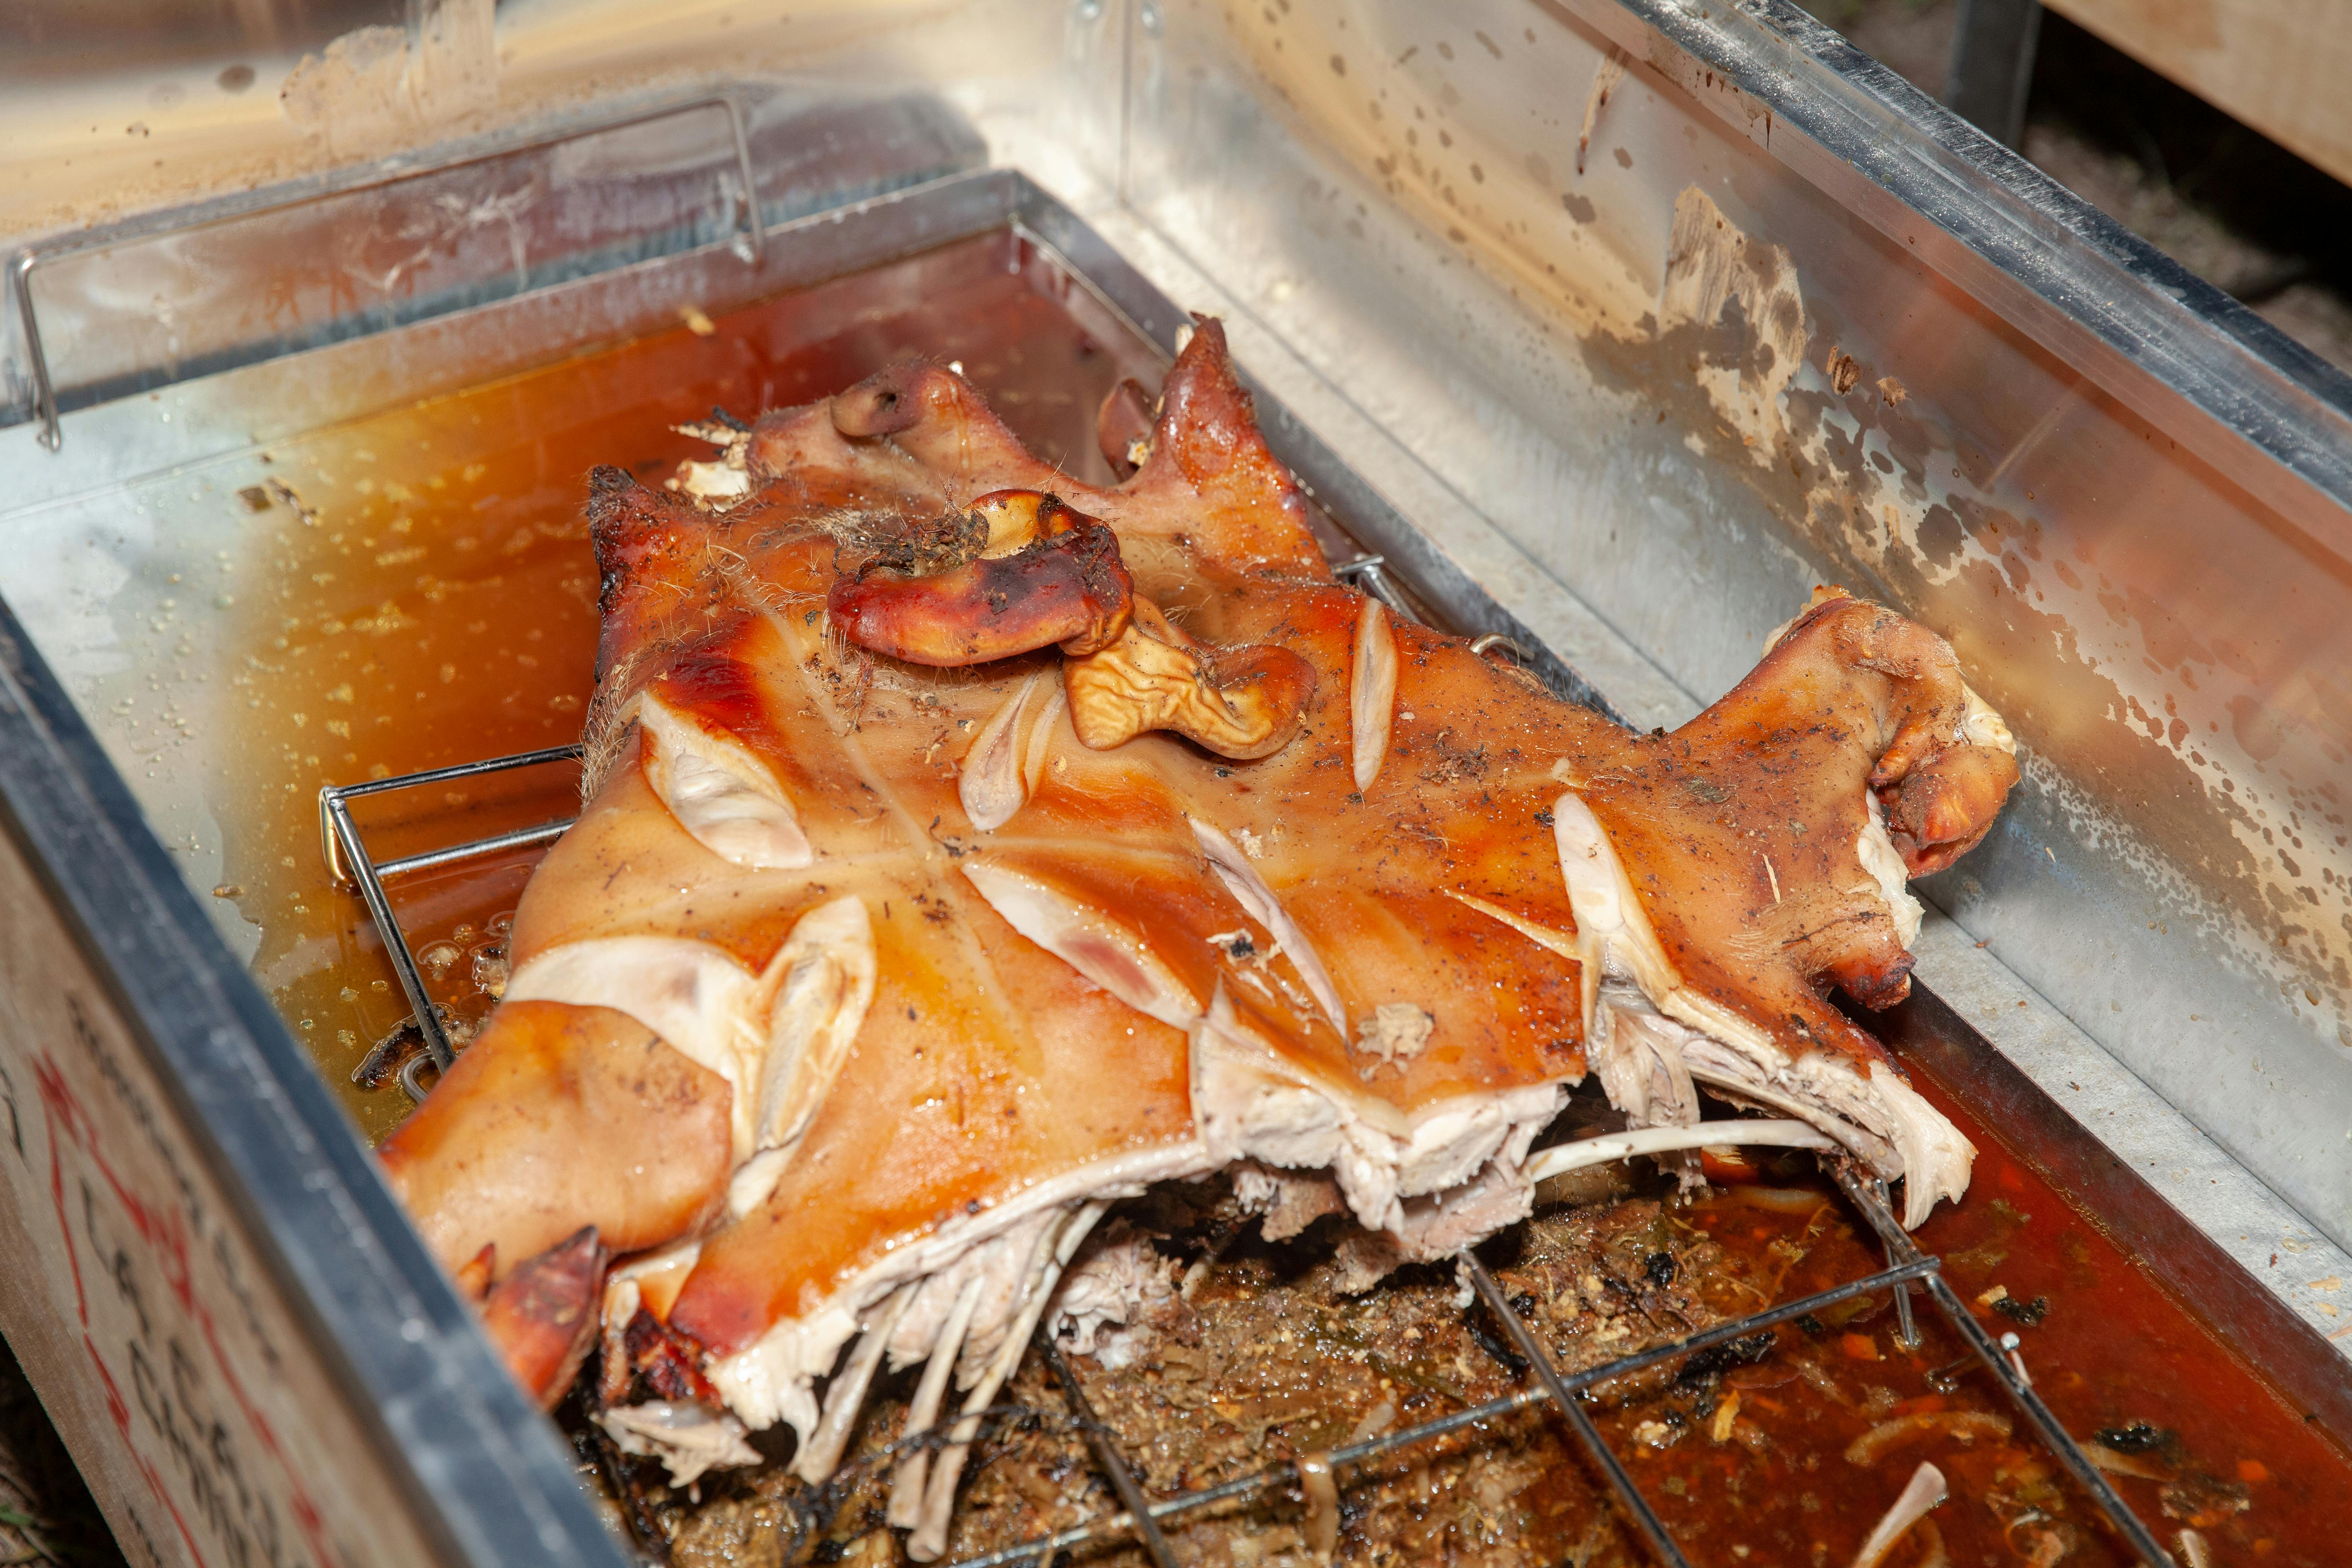 Free stock photo of Roast Pig on the Grill, swine